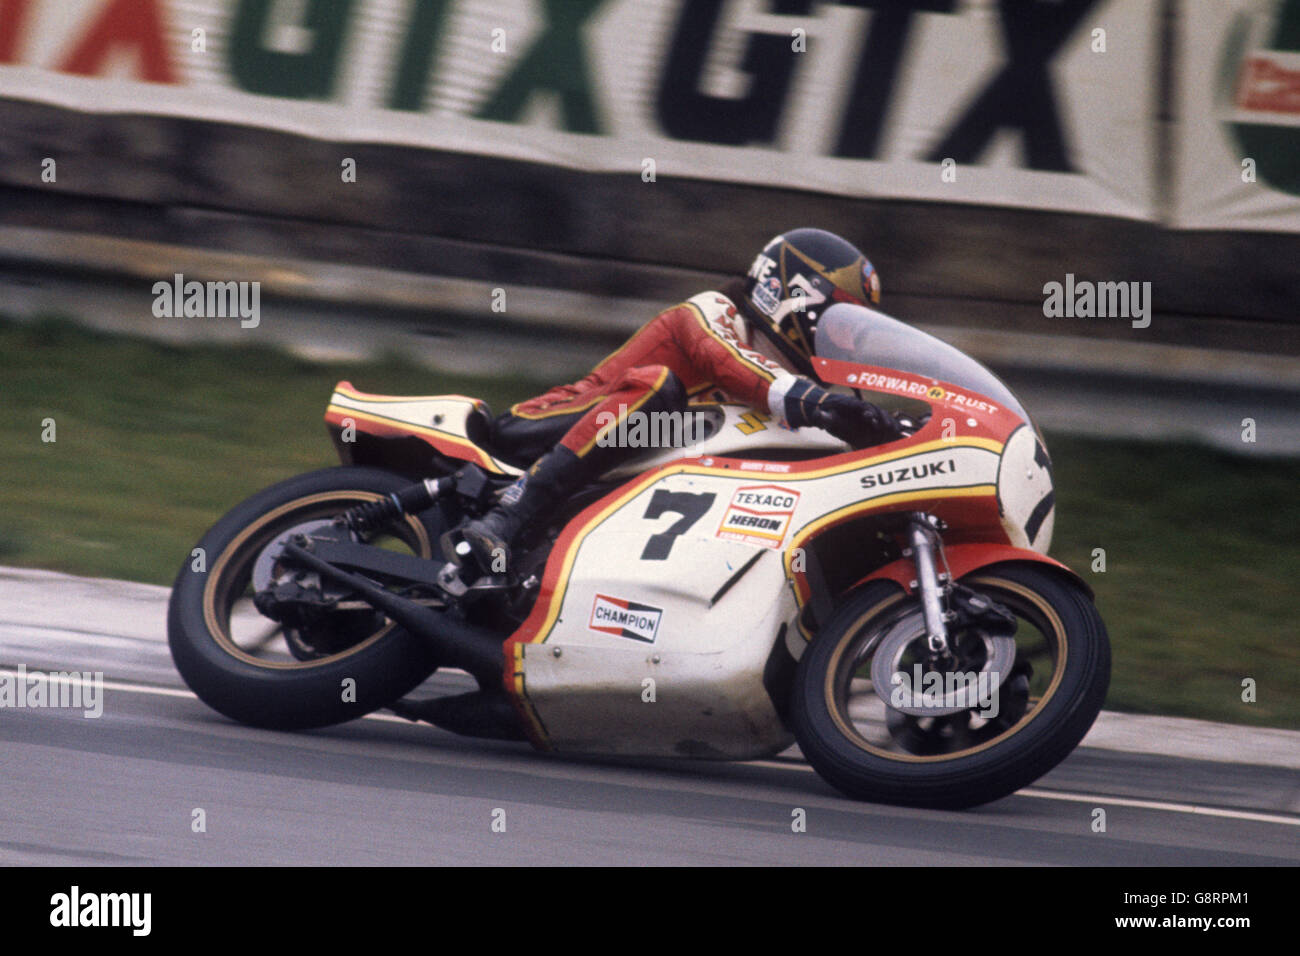 Barry Sheene 1976 and 1977 Motorcycle World Champion Illustration